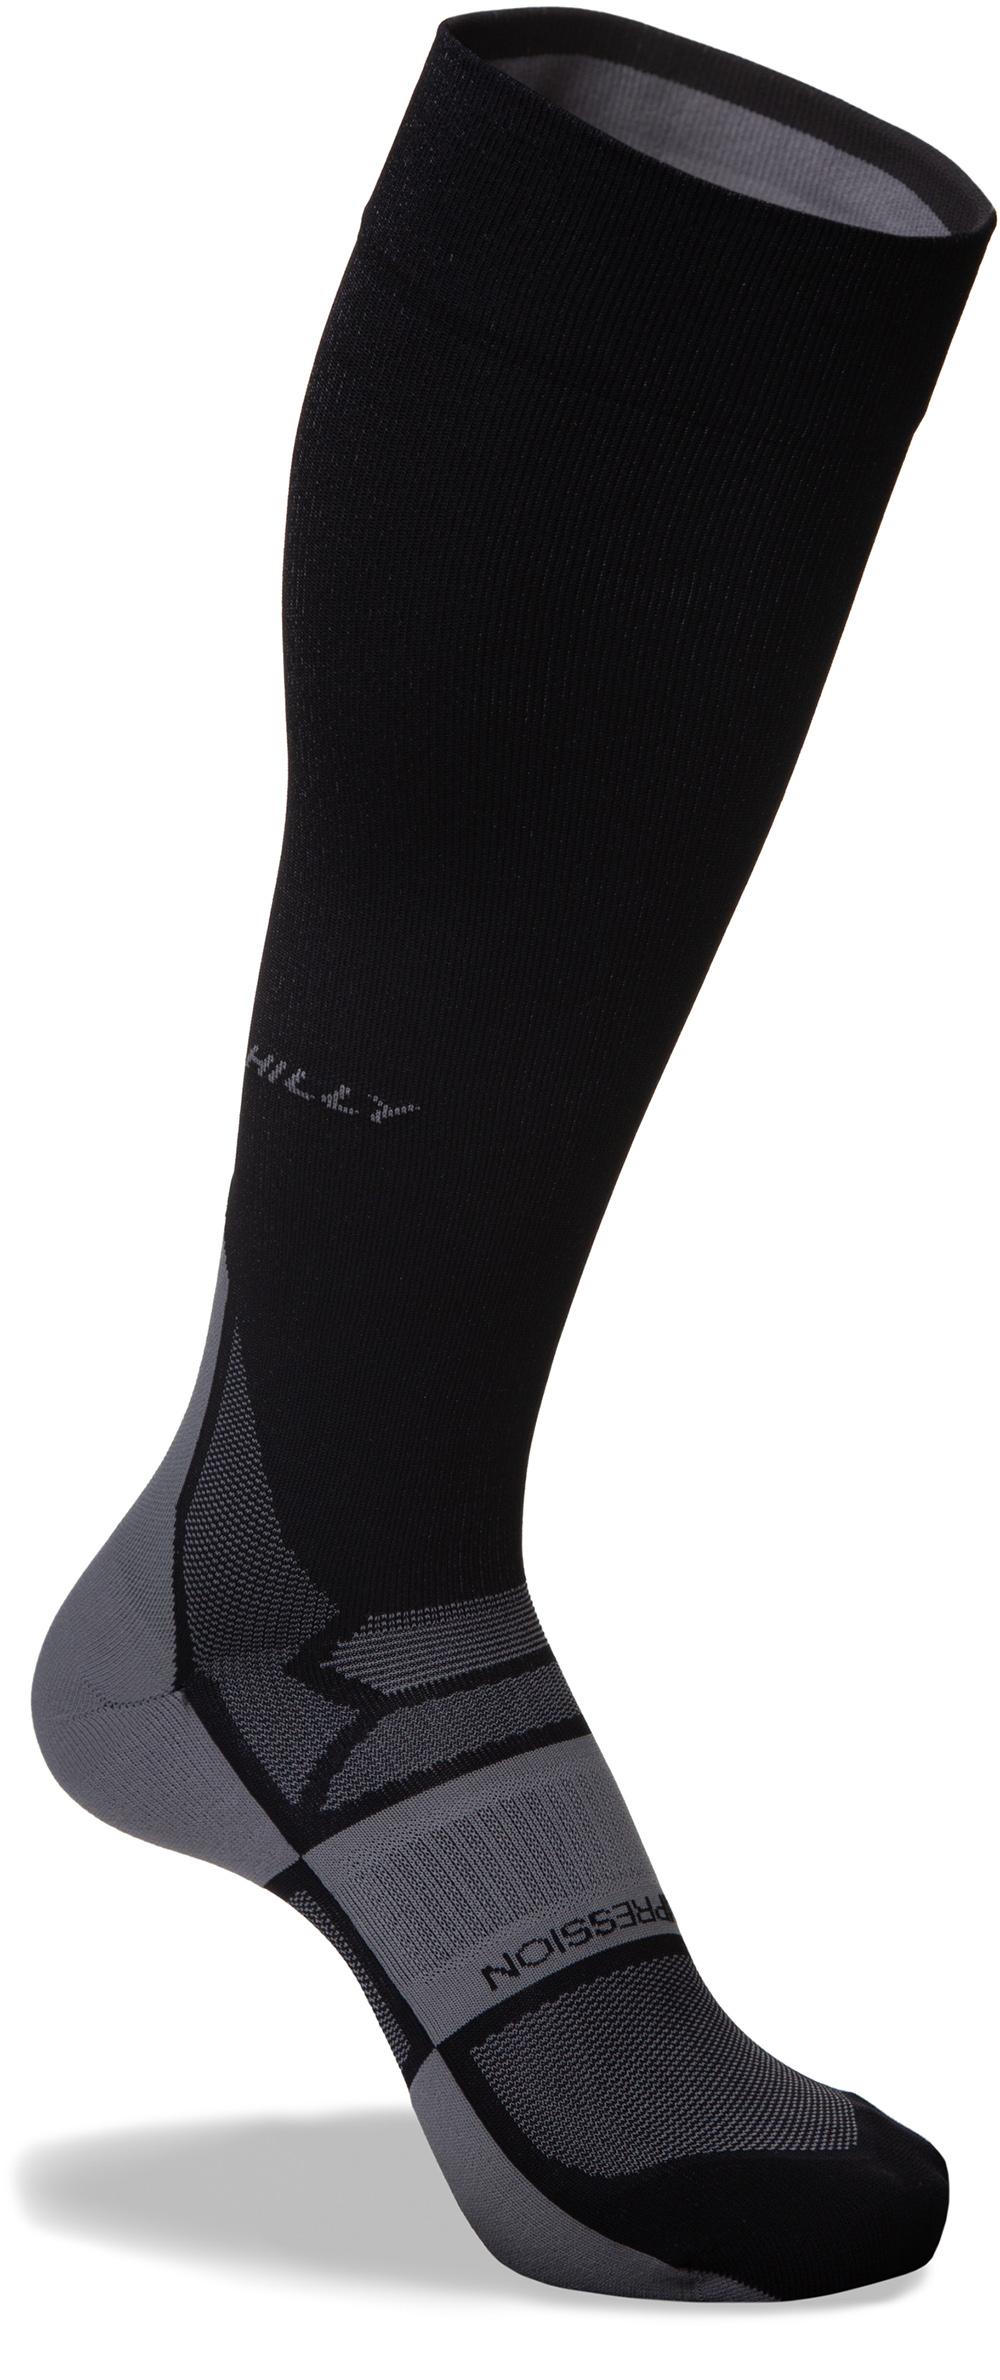 Hilly Pulse Compression Sock - Black/grey